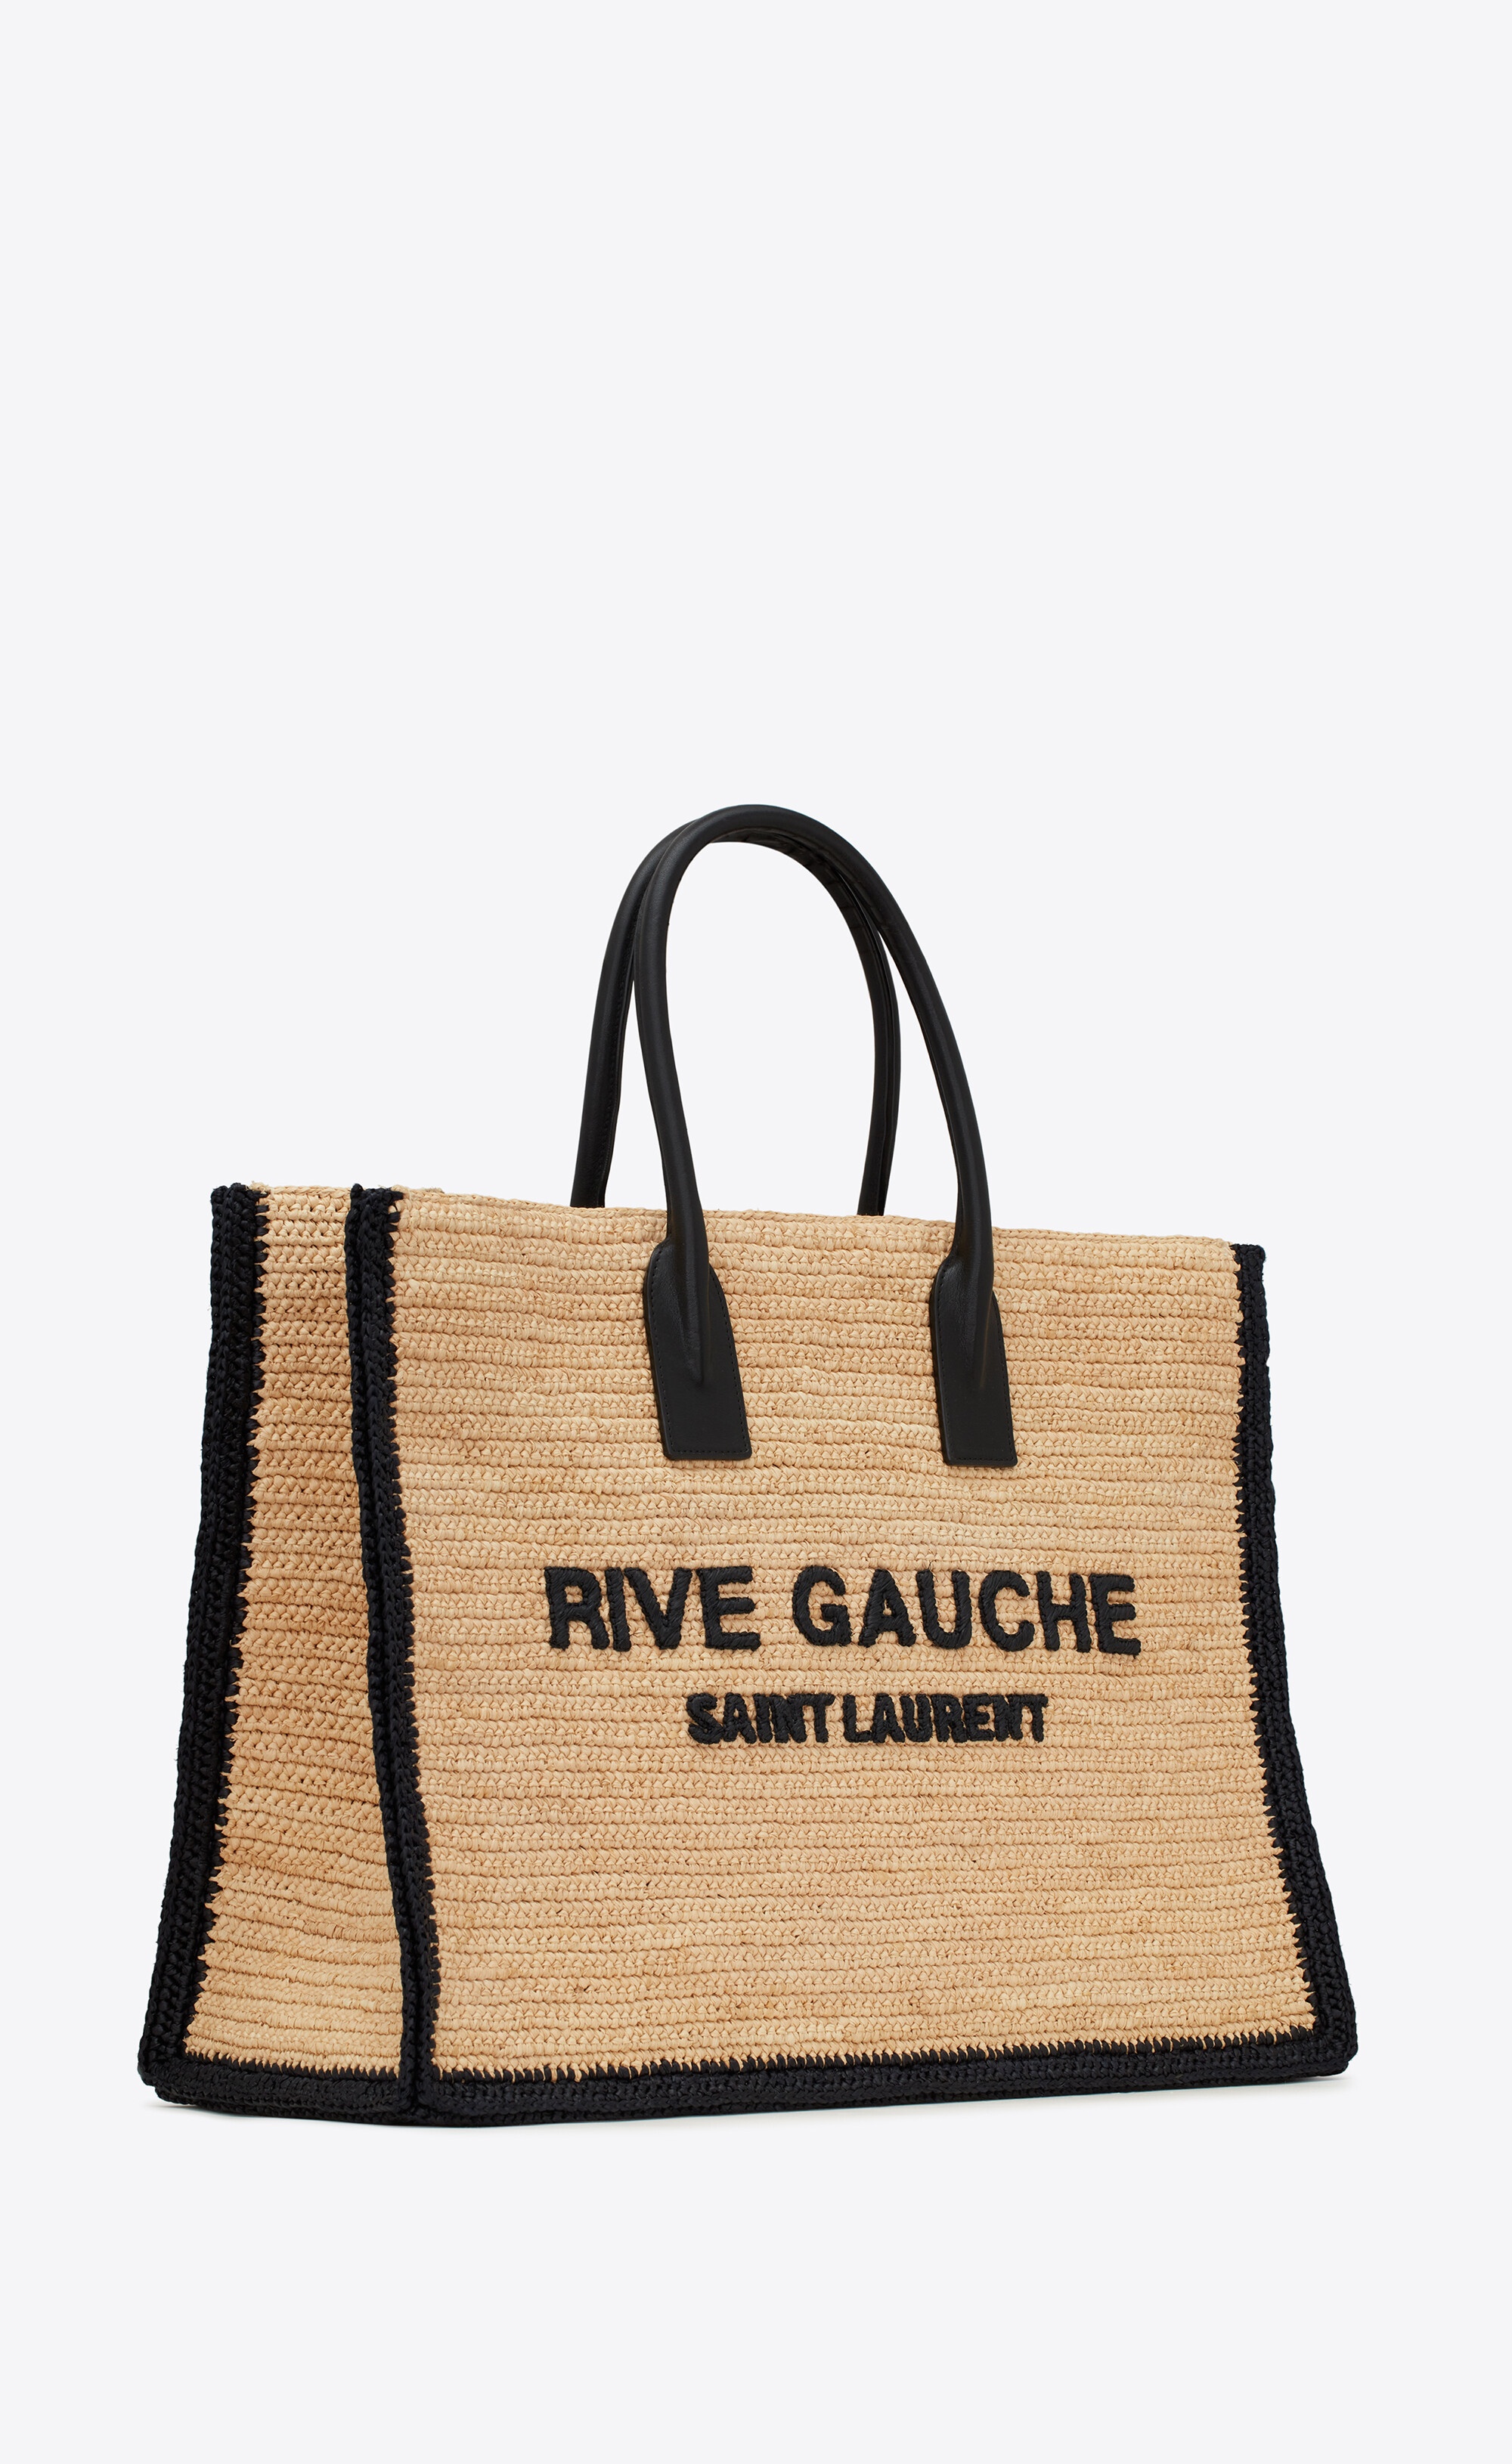 rive gauche tote bag in raffia and leather - 5